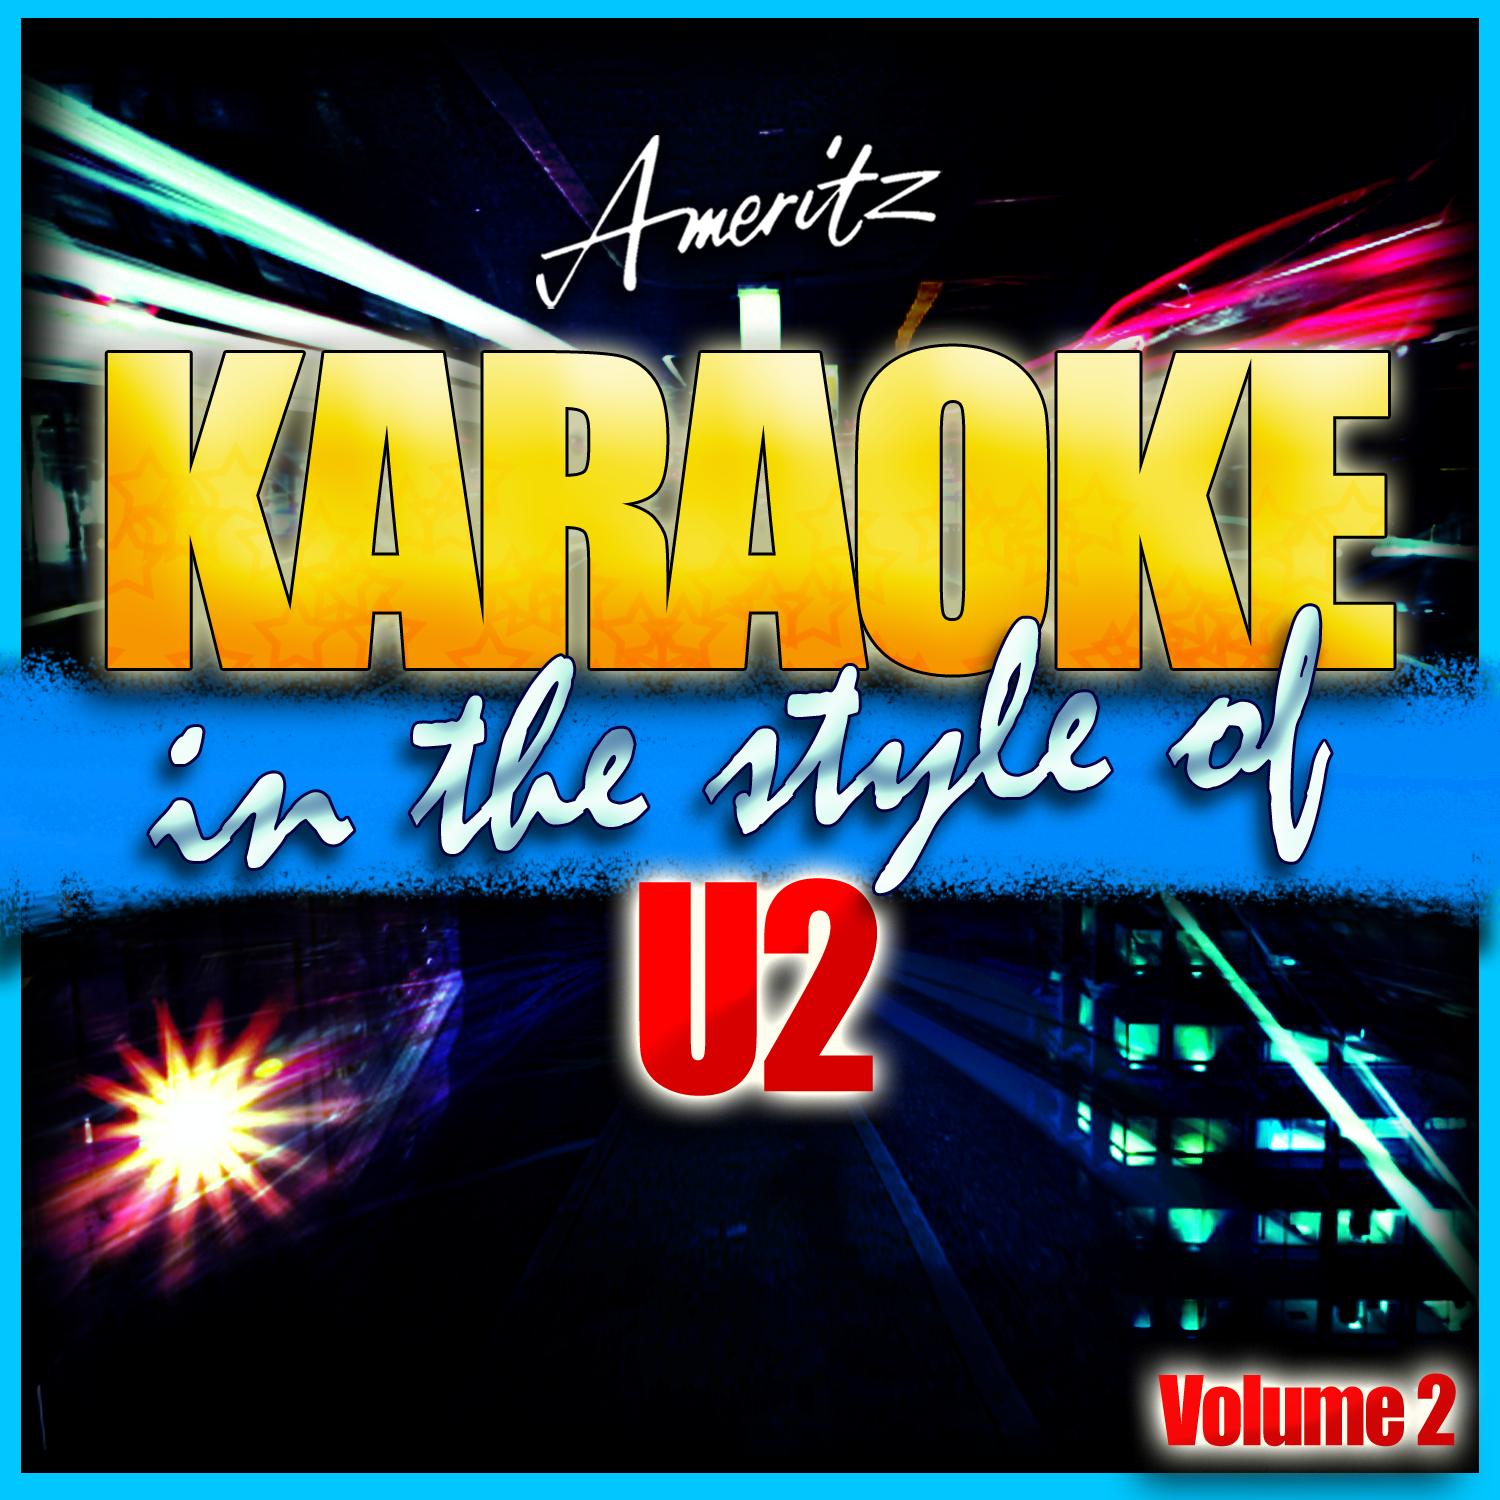 Stay (Faraway, So close) [In the Style of U2] [Karaoke Version]